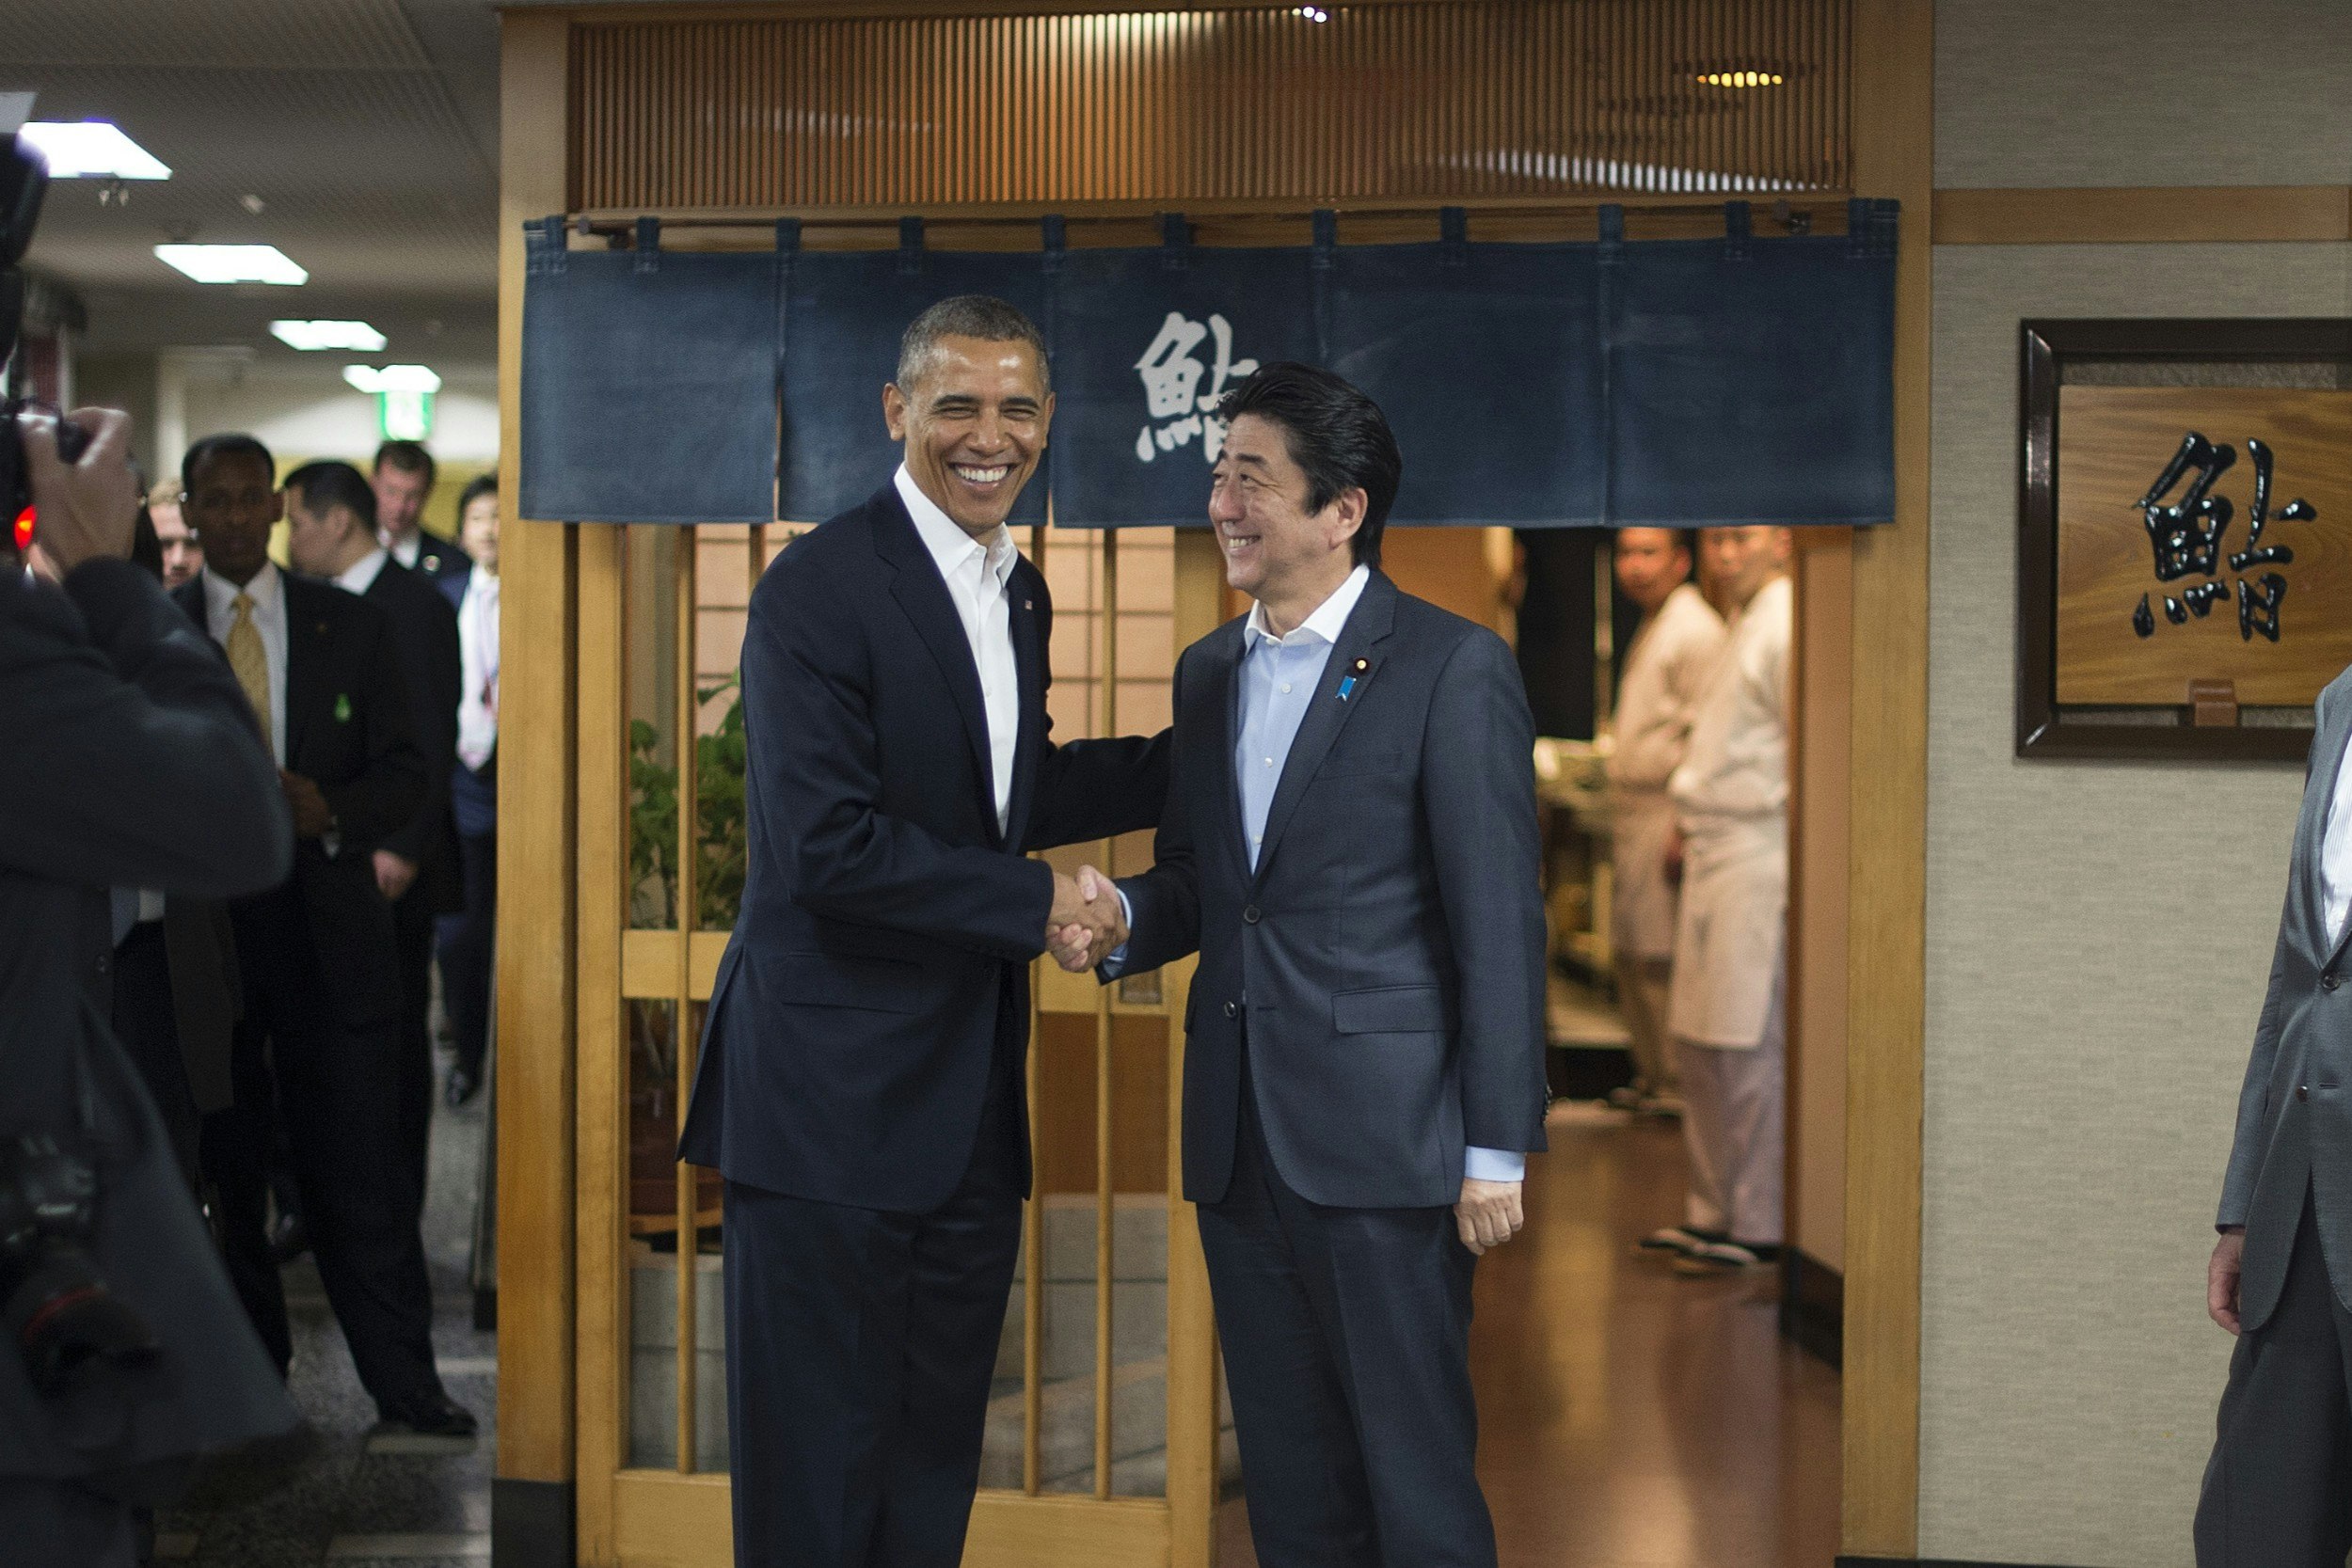 Barack Obama and Japanese prime minister Japanese outside a Japanese sushi restaurant